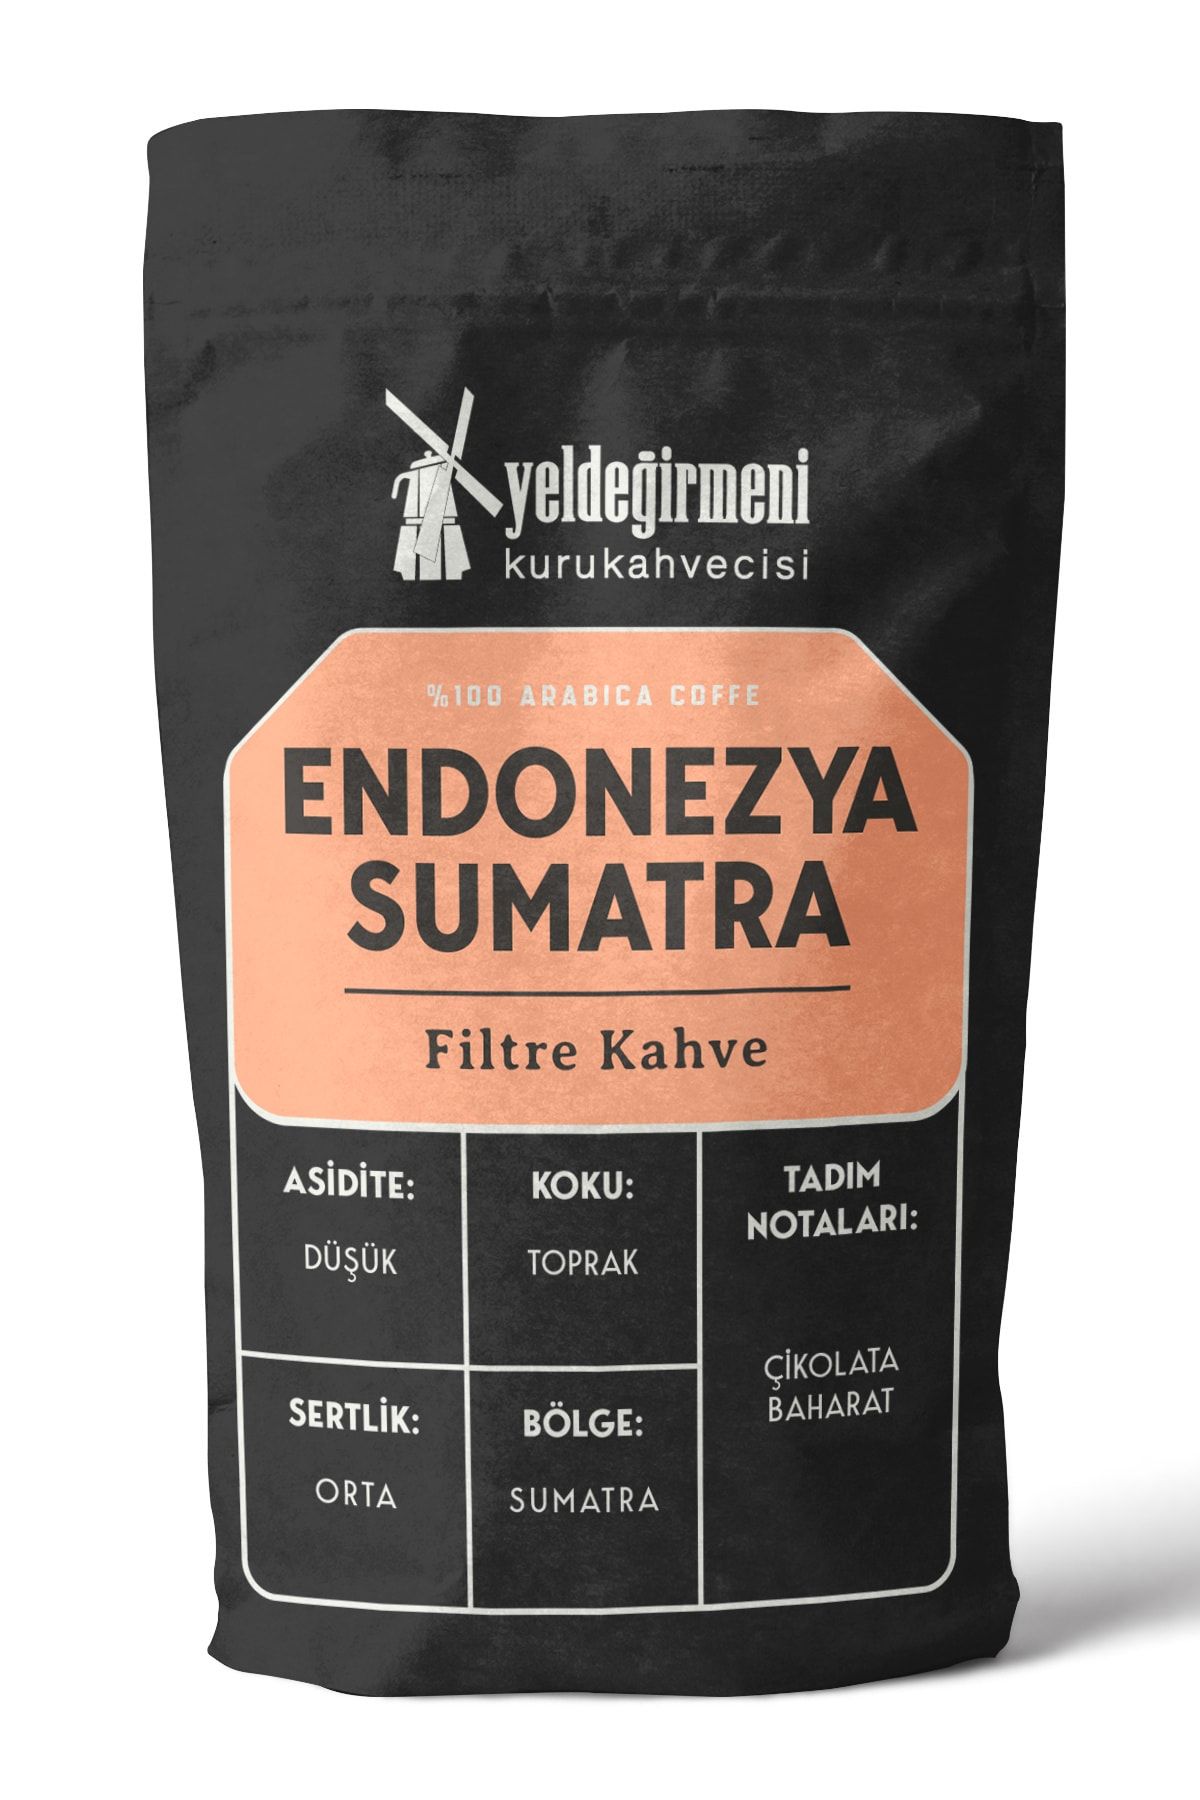 Yeldeğirmeni Kurukahvecisi Endonezya Sumatra Filtre Kahve 1000 gr